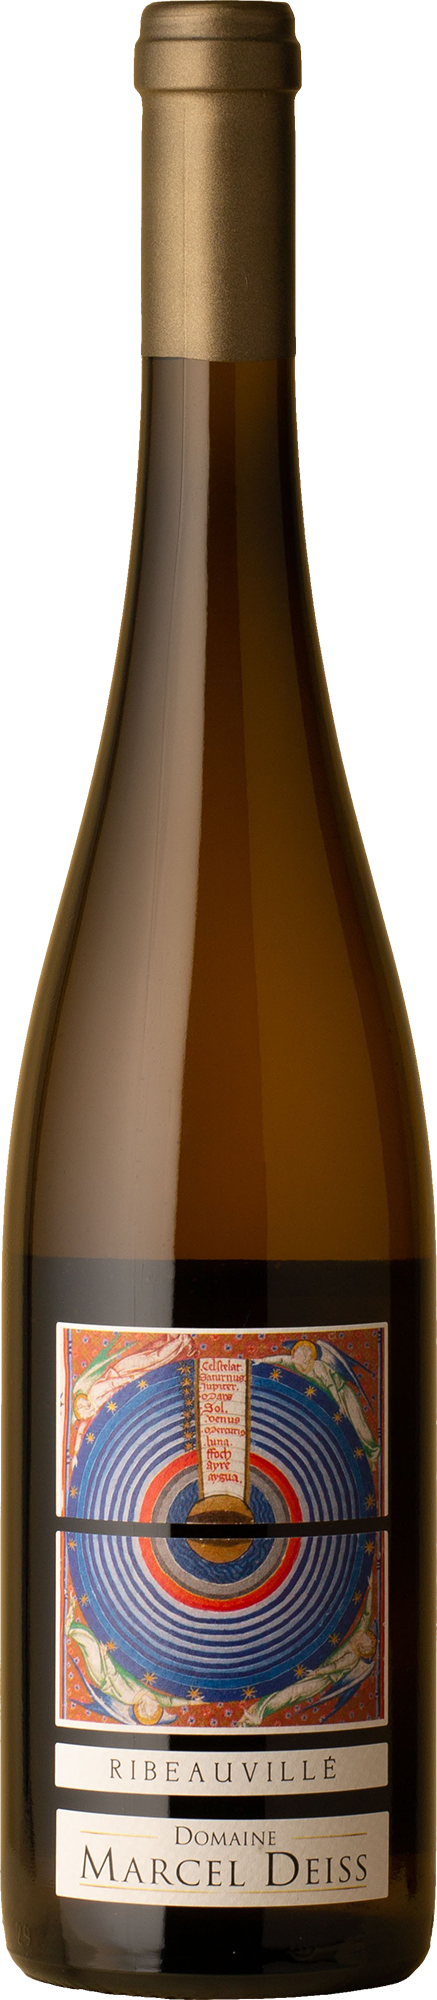 Marcel Deiss - Ribeauvillé Non Filtré Riesling Blend 2018 White Wine